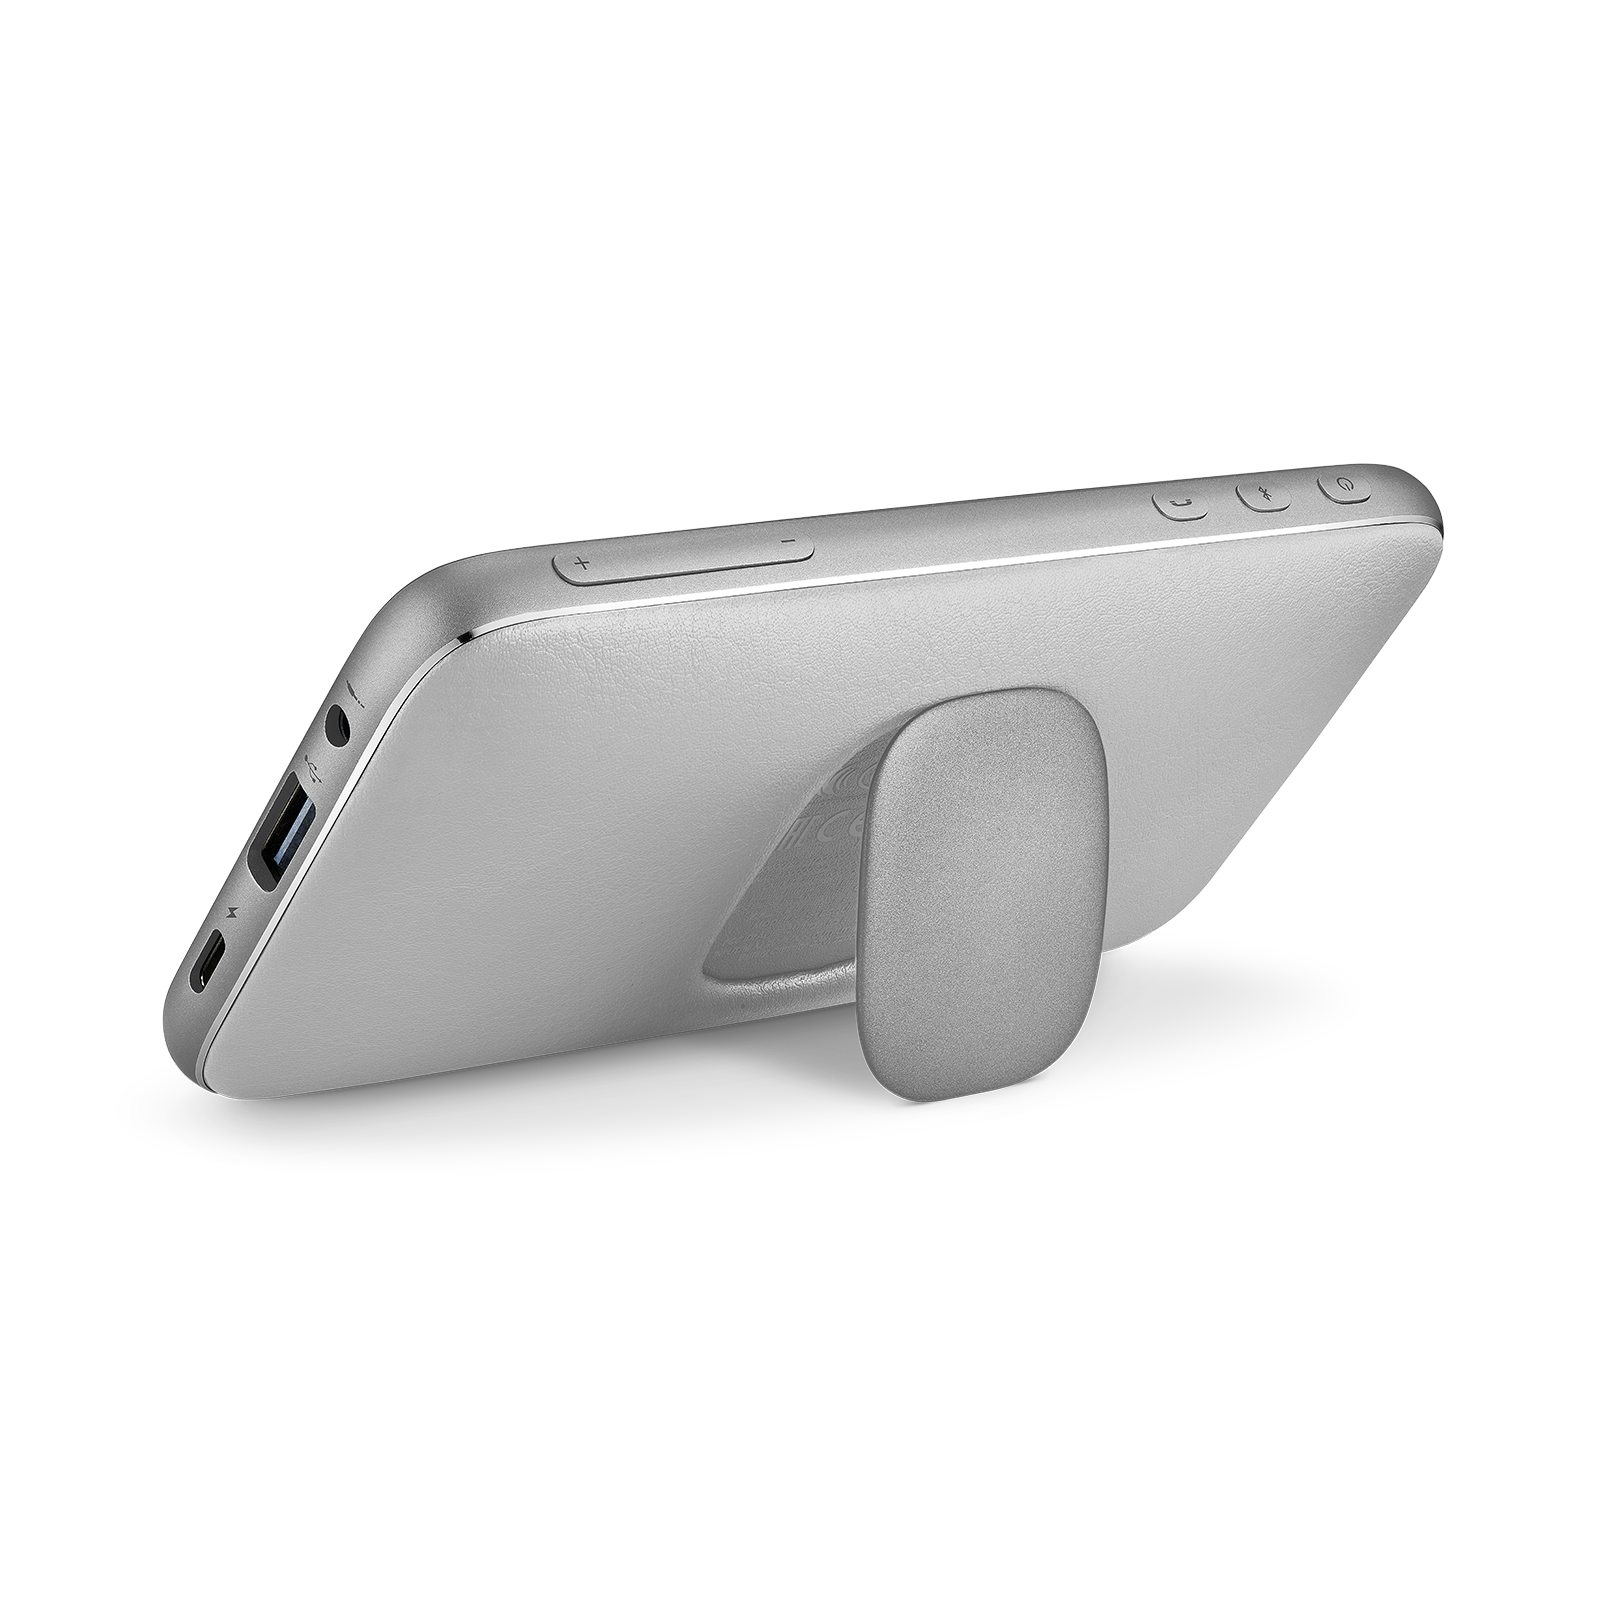 Harman Kardon Esquire Mini 2 - Silver - Ultra-slim and portable premium Bluetooth Speaker - Back